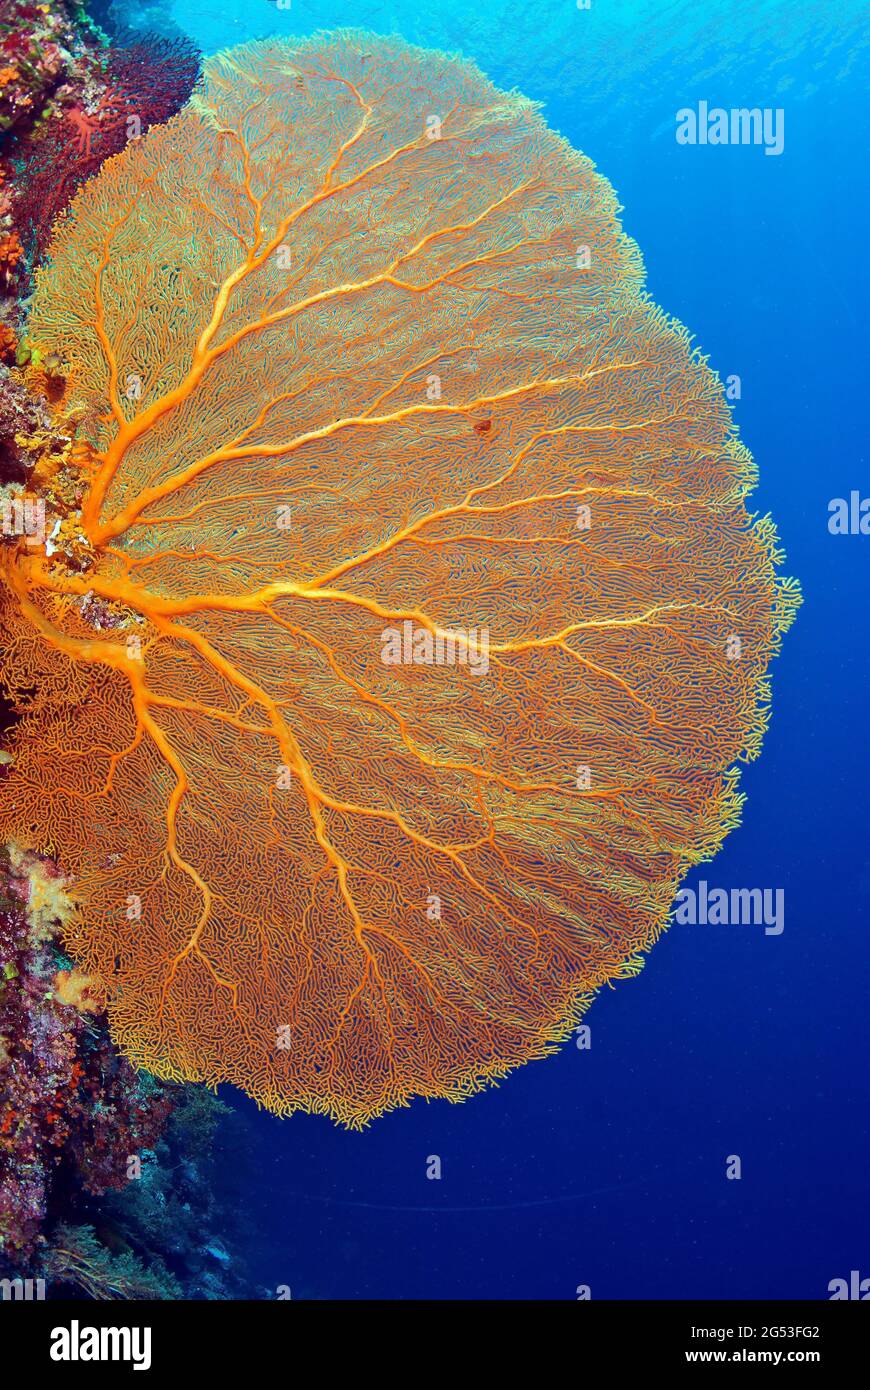 Gran ventilador de mar naranja, Canal de Siais, Palau, Micronesia Foto de stock